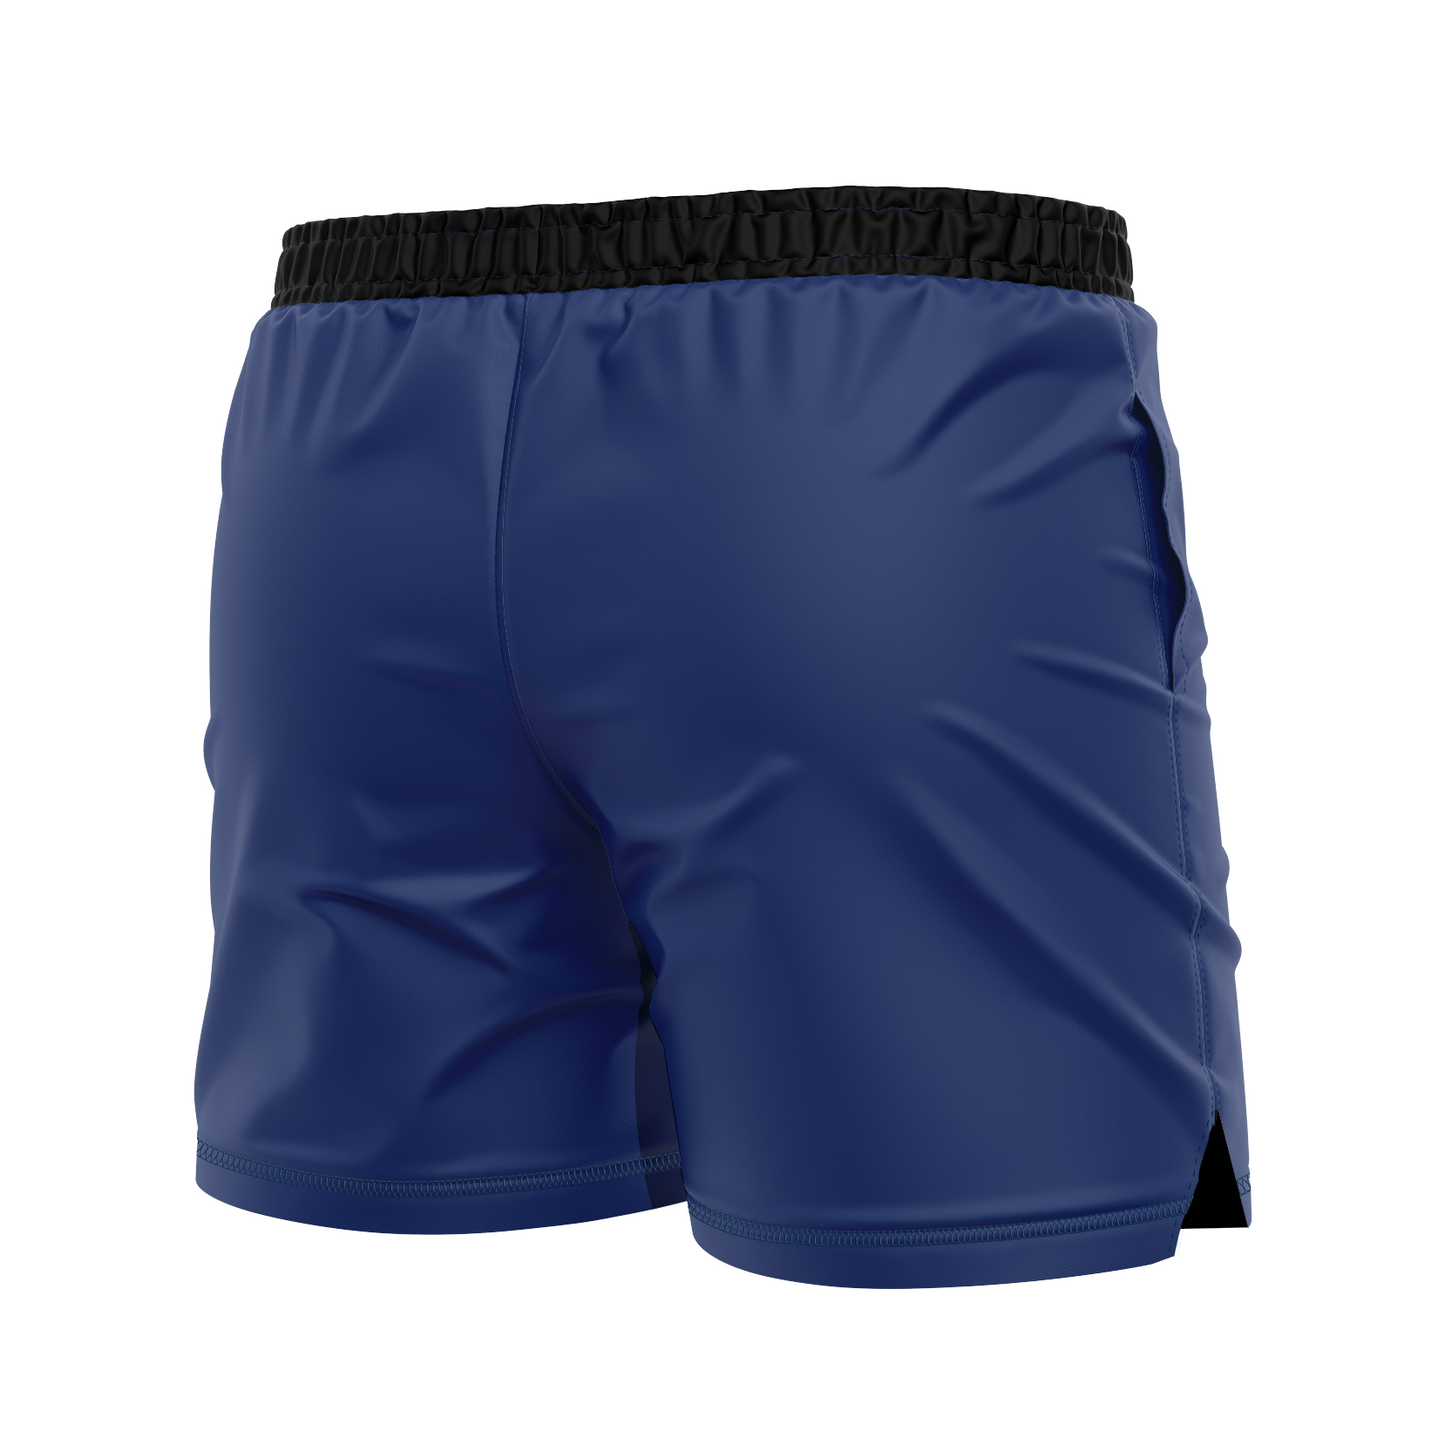 Tracker men's FC shorts, indigo / coral